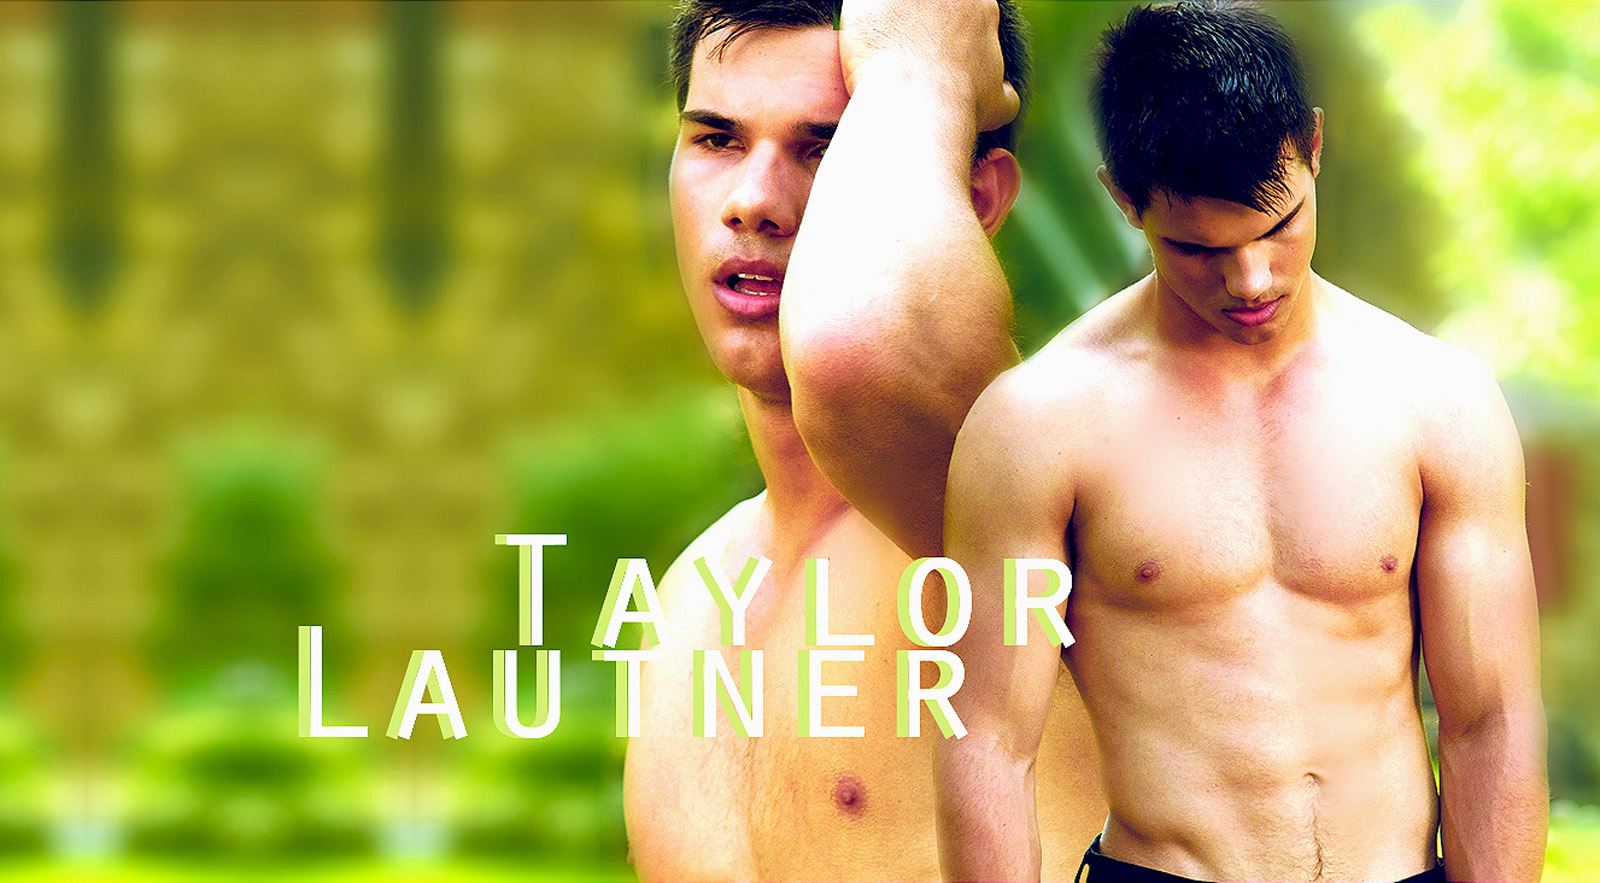 Taylor Lautner Shirtless Naked Muscles Wallpaper